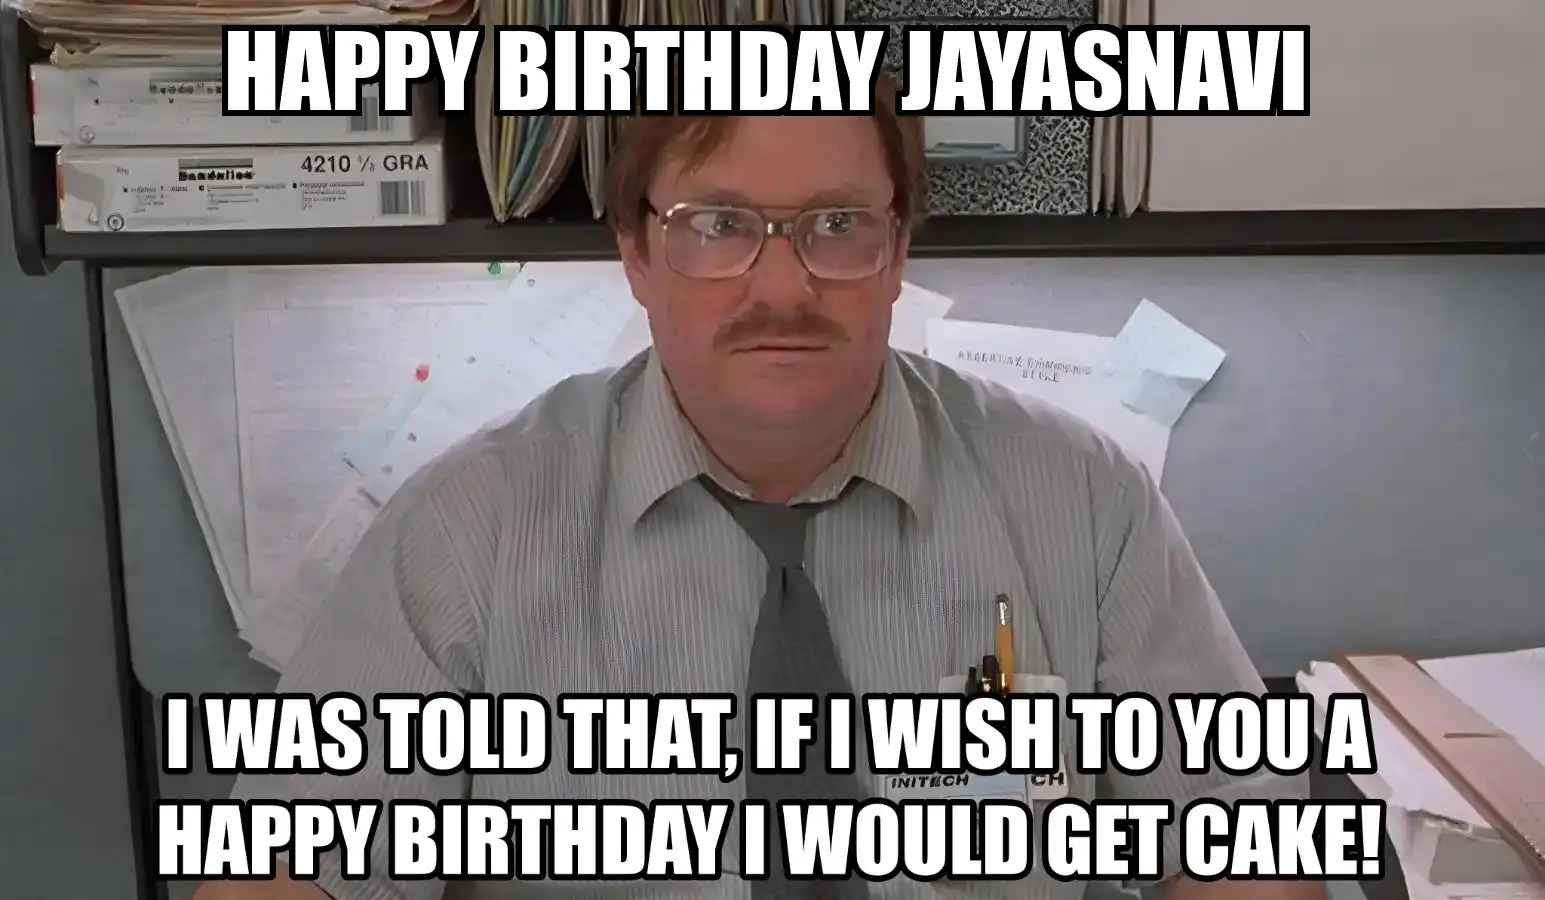 Happy Birthday Jayasnavi I Would Get A Cake Meme